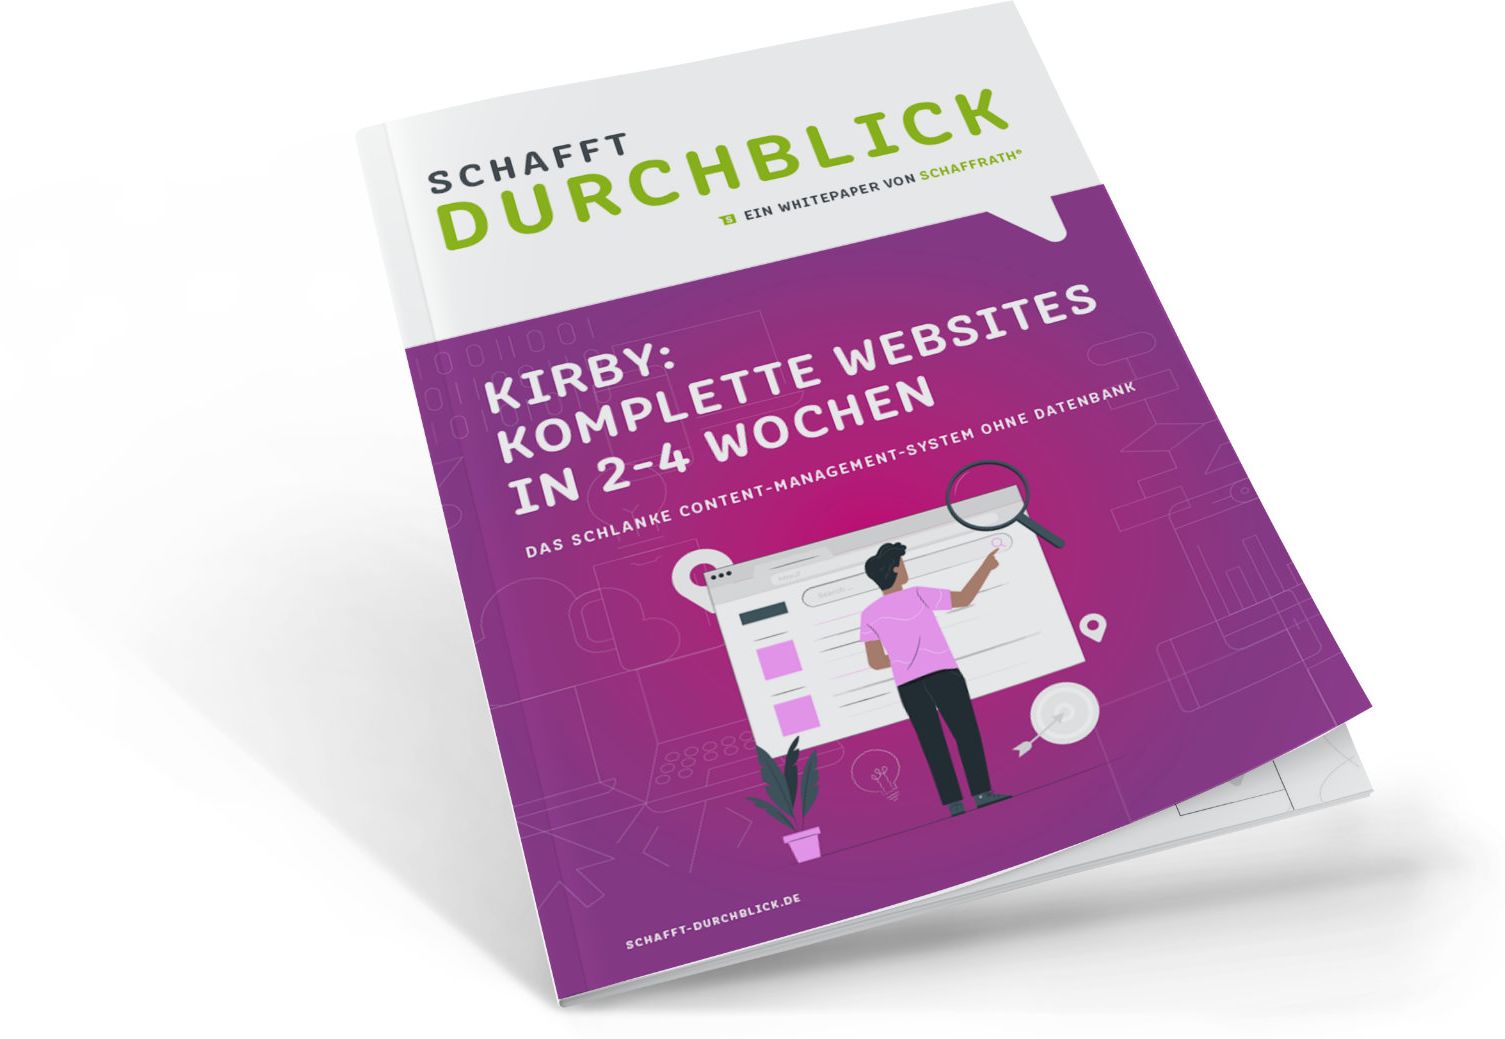 Kirby Whitepaper: Komplette Websites in 2-4 Wochen